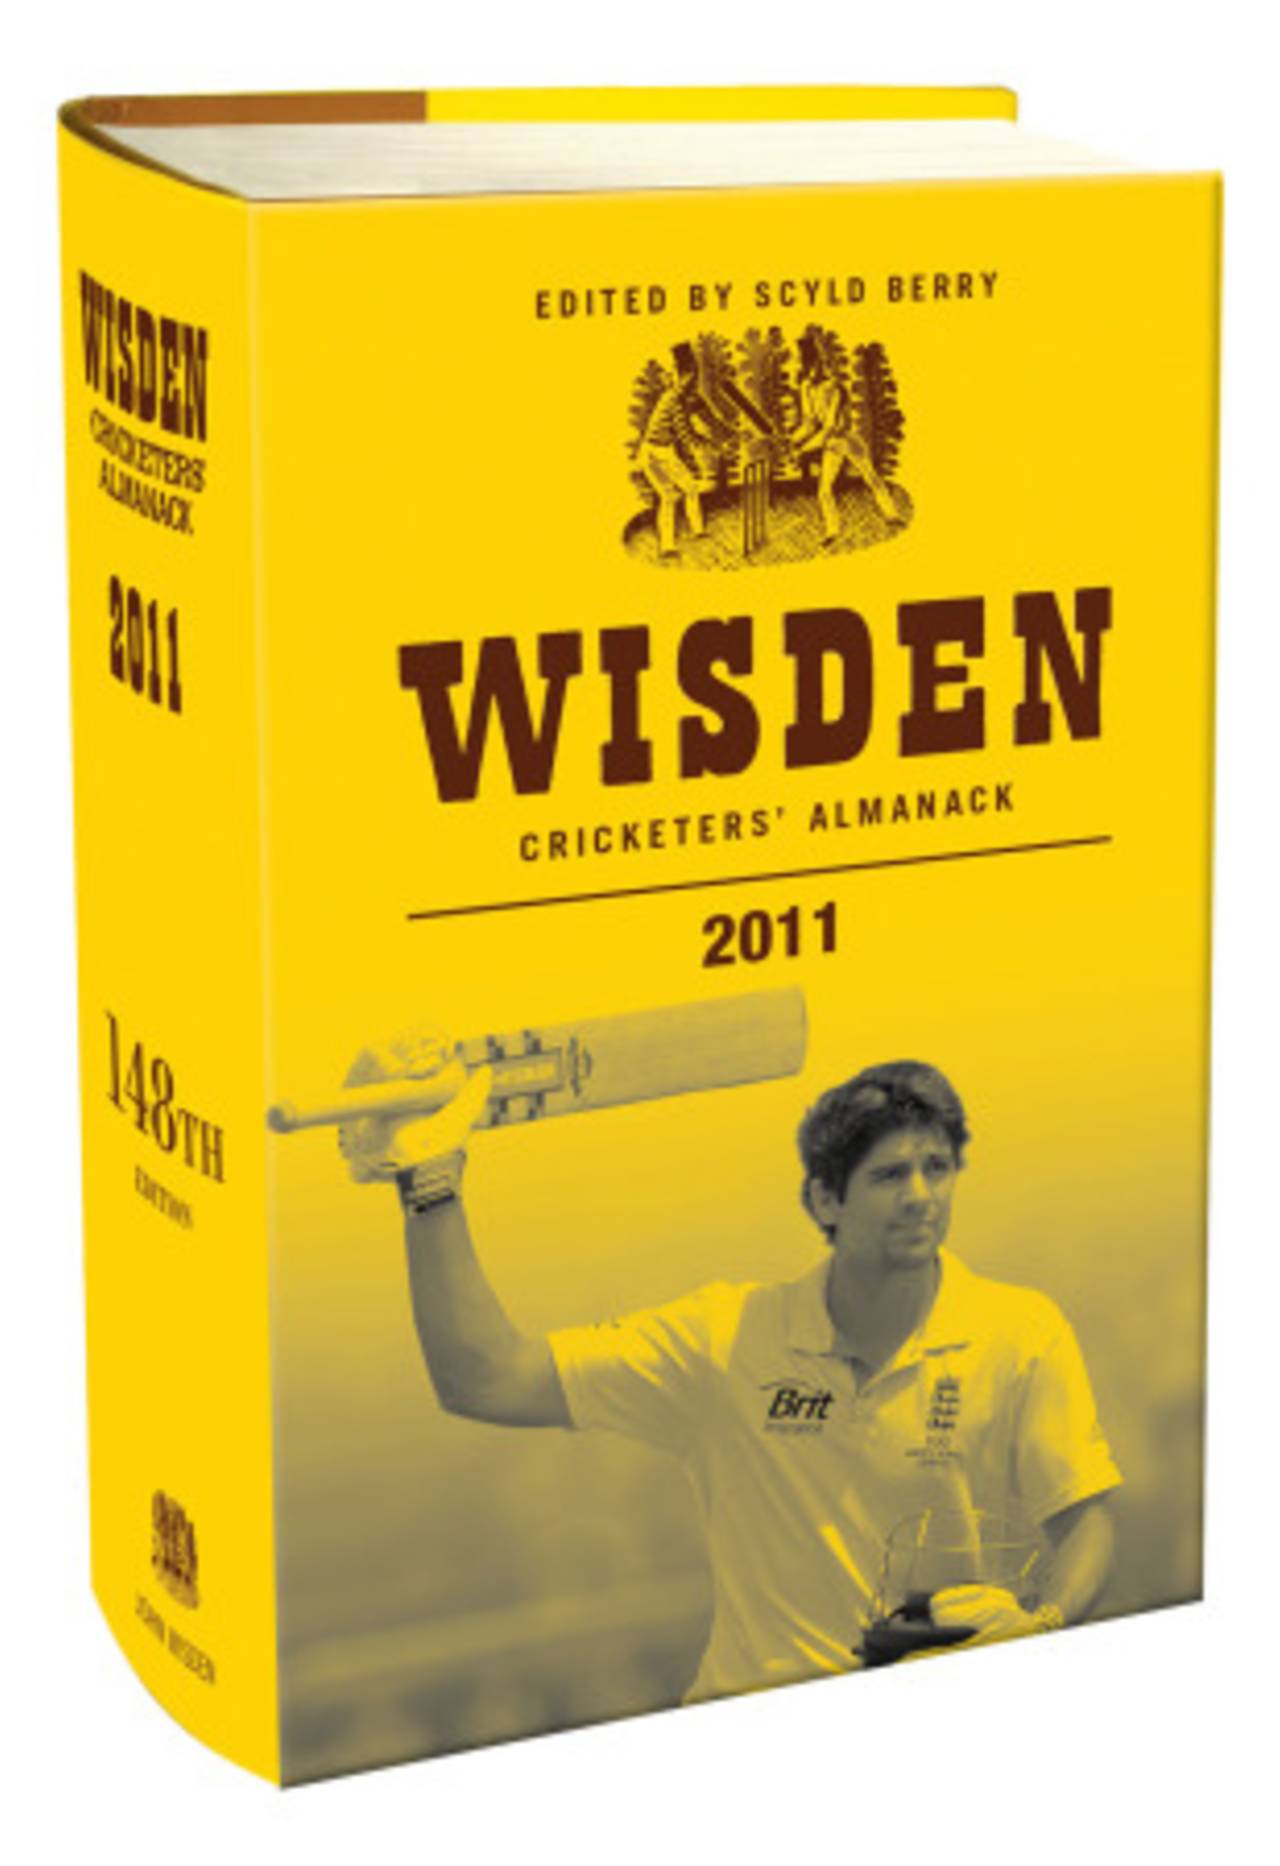 Wisden 2011 features four Cricketers of the Year, instead of the usual five&nbsp;&nbsp;&bull;&nbsp;&nbsp;John Wisden & Co